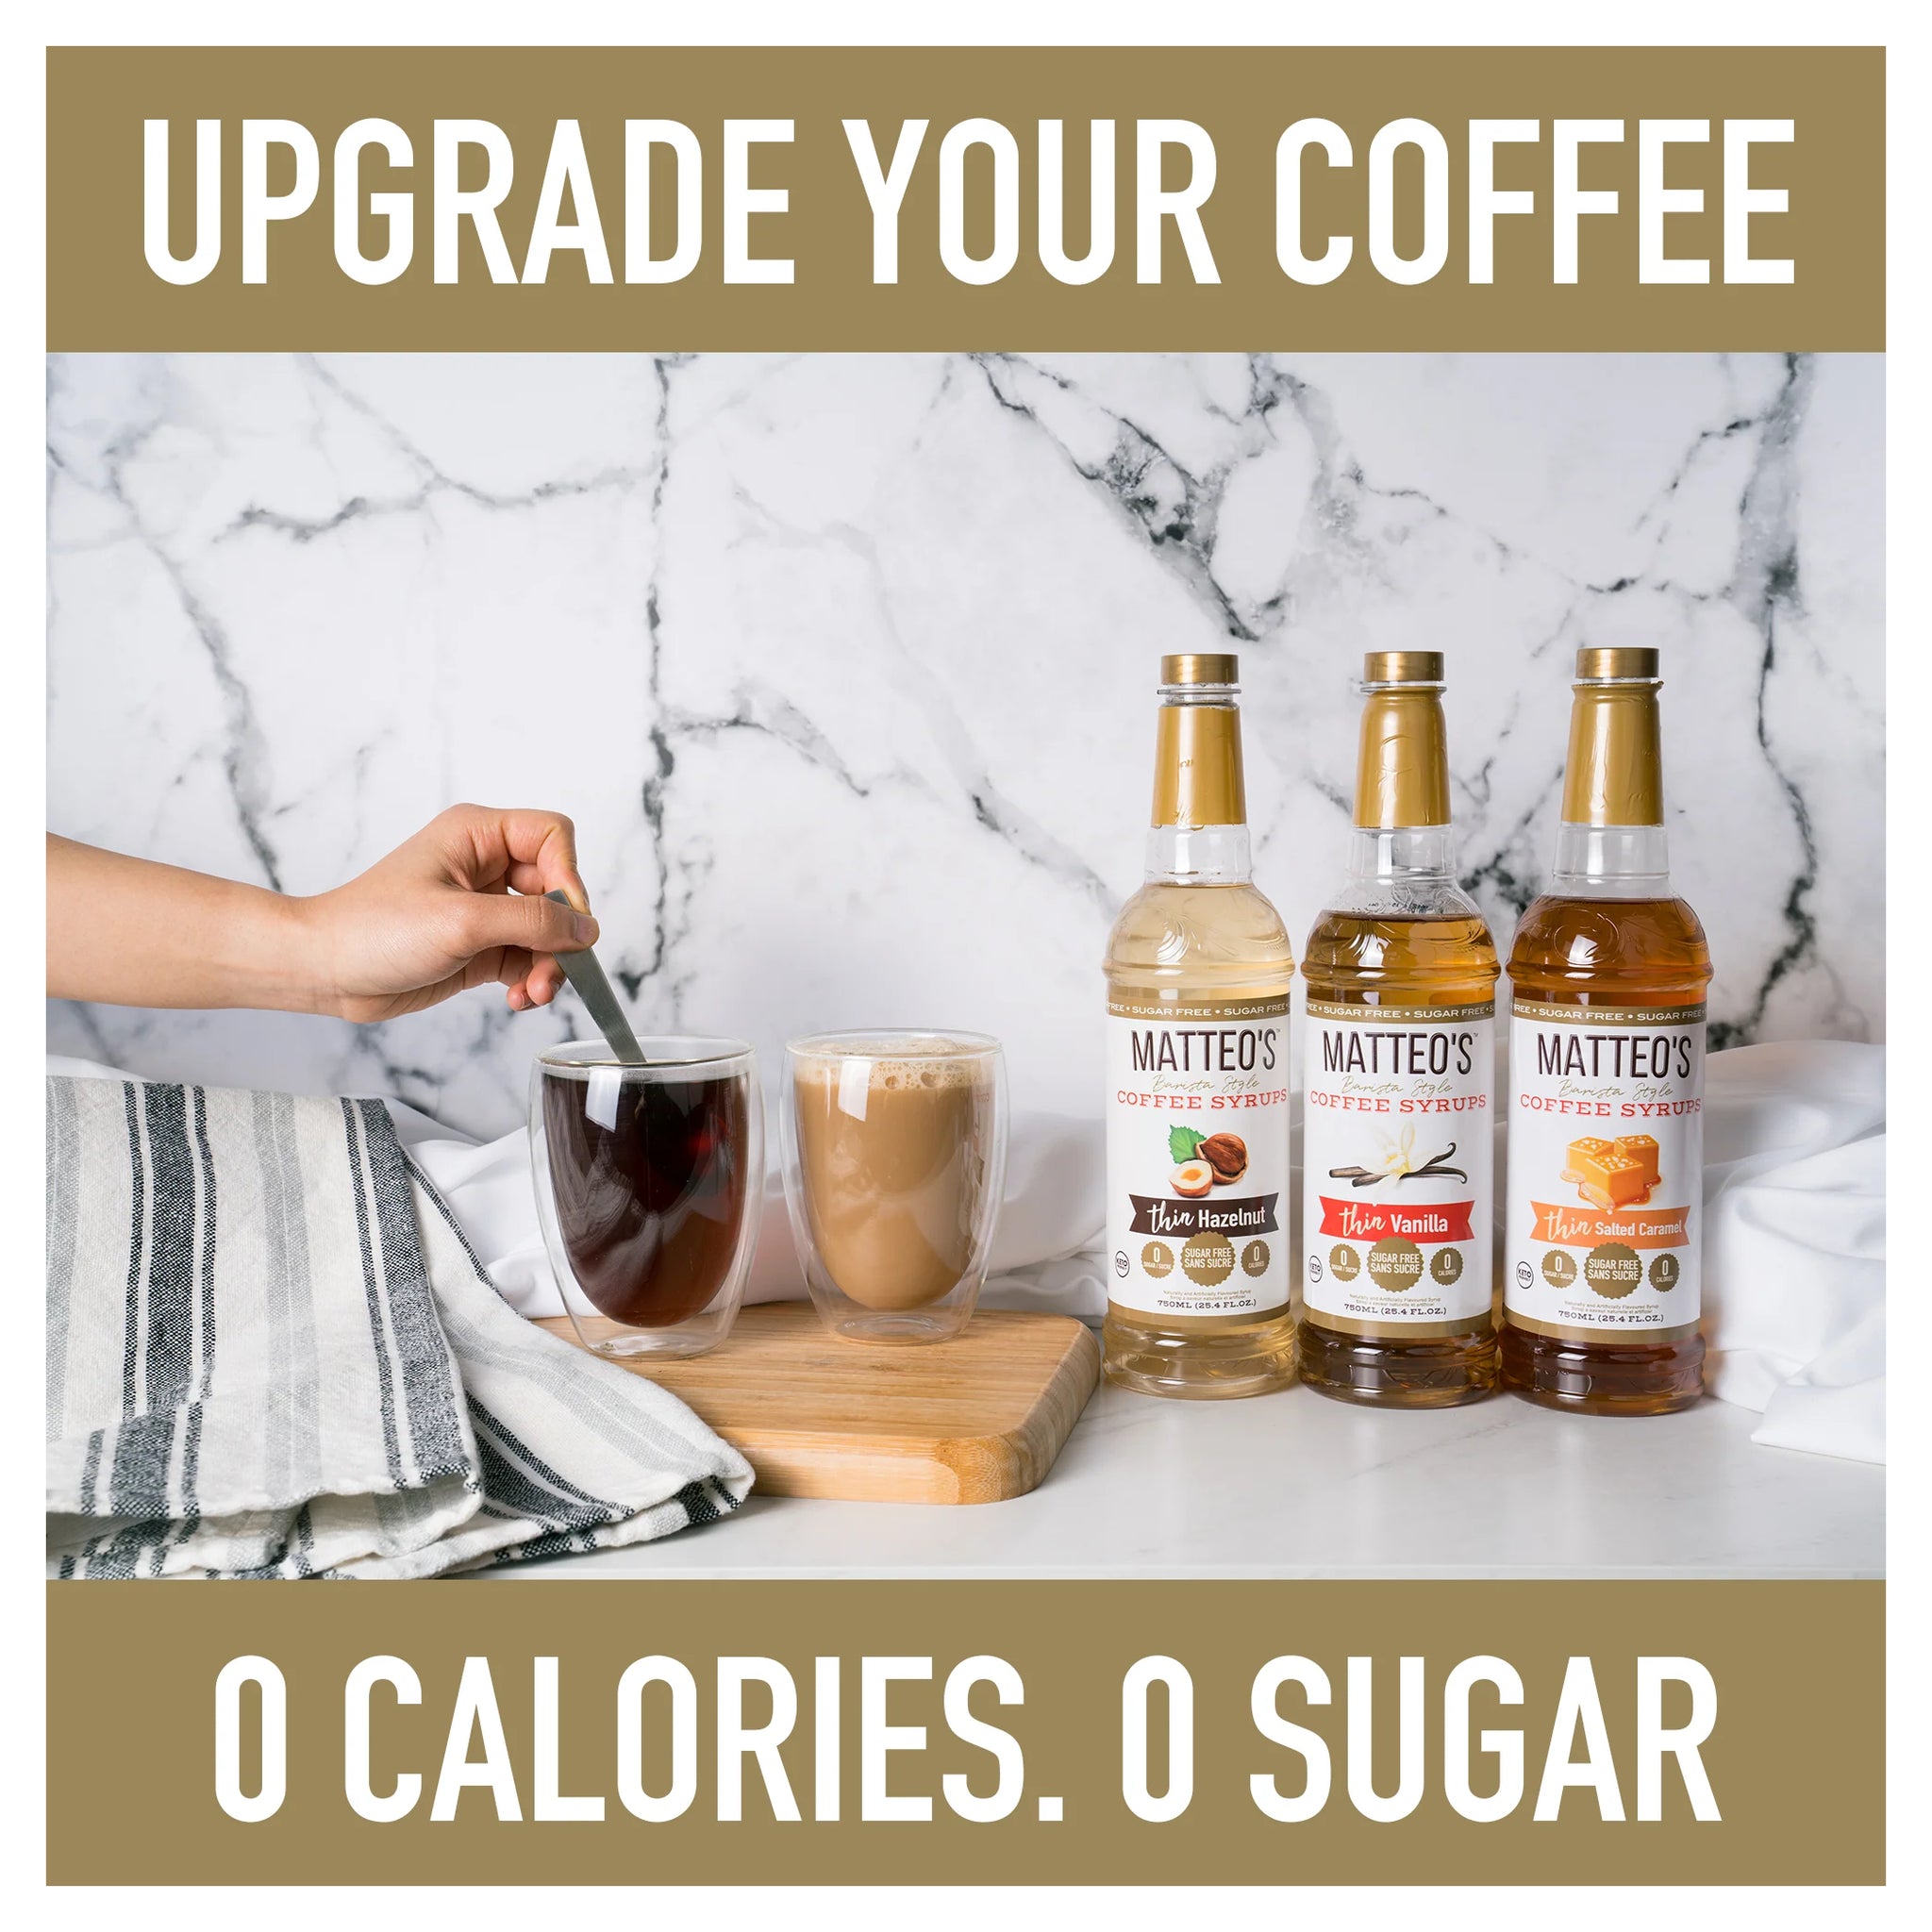 Matteo's Coffee Syrup Sugar Free English Toffee / 750ml